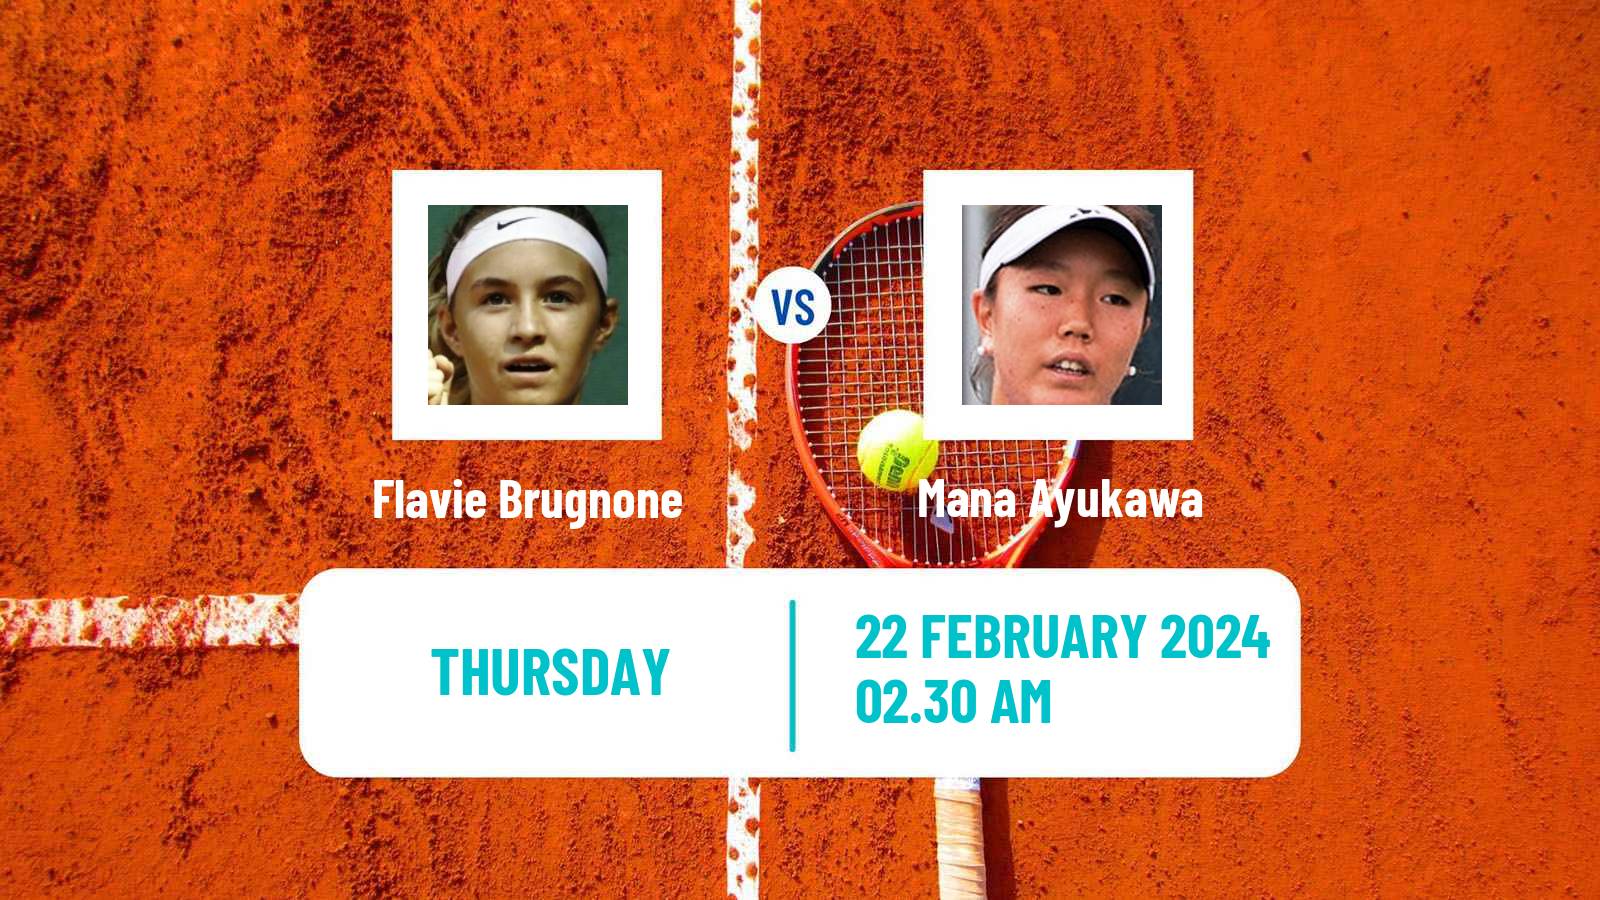 Tennis ITF W15 Sharm Elsheikh 3 Women Flavie Brugnone - Mana Ayukawa